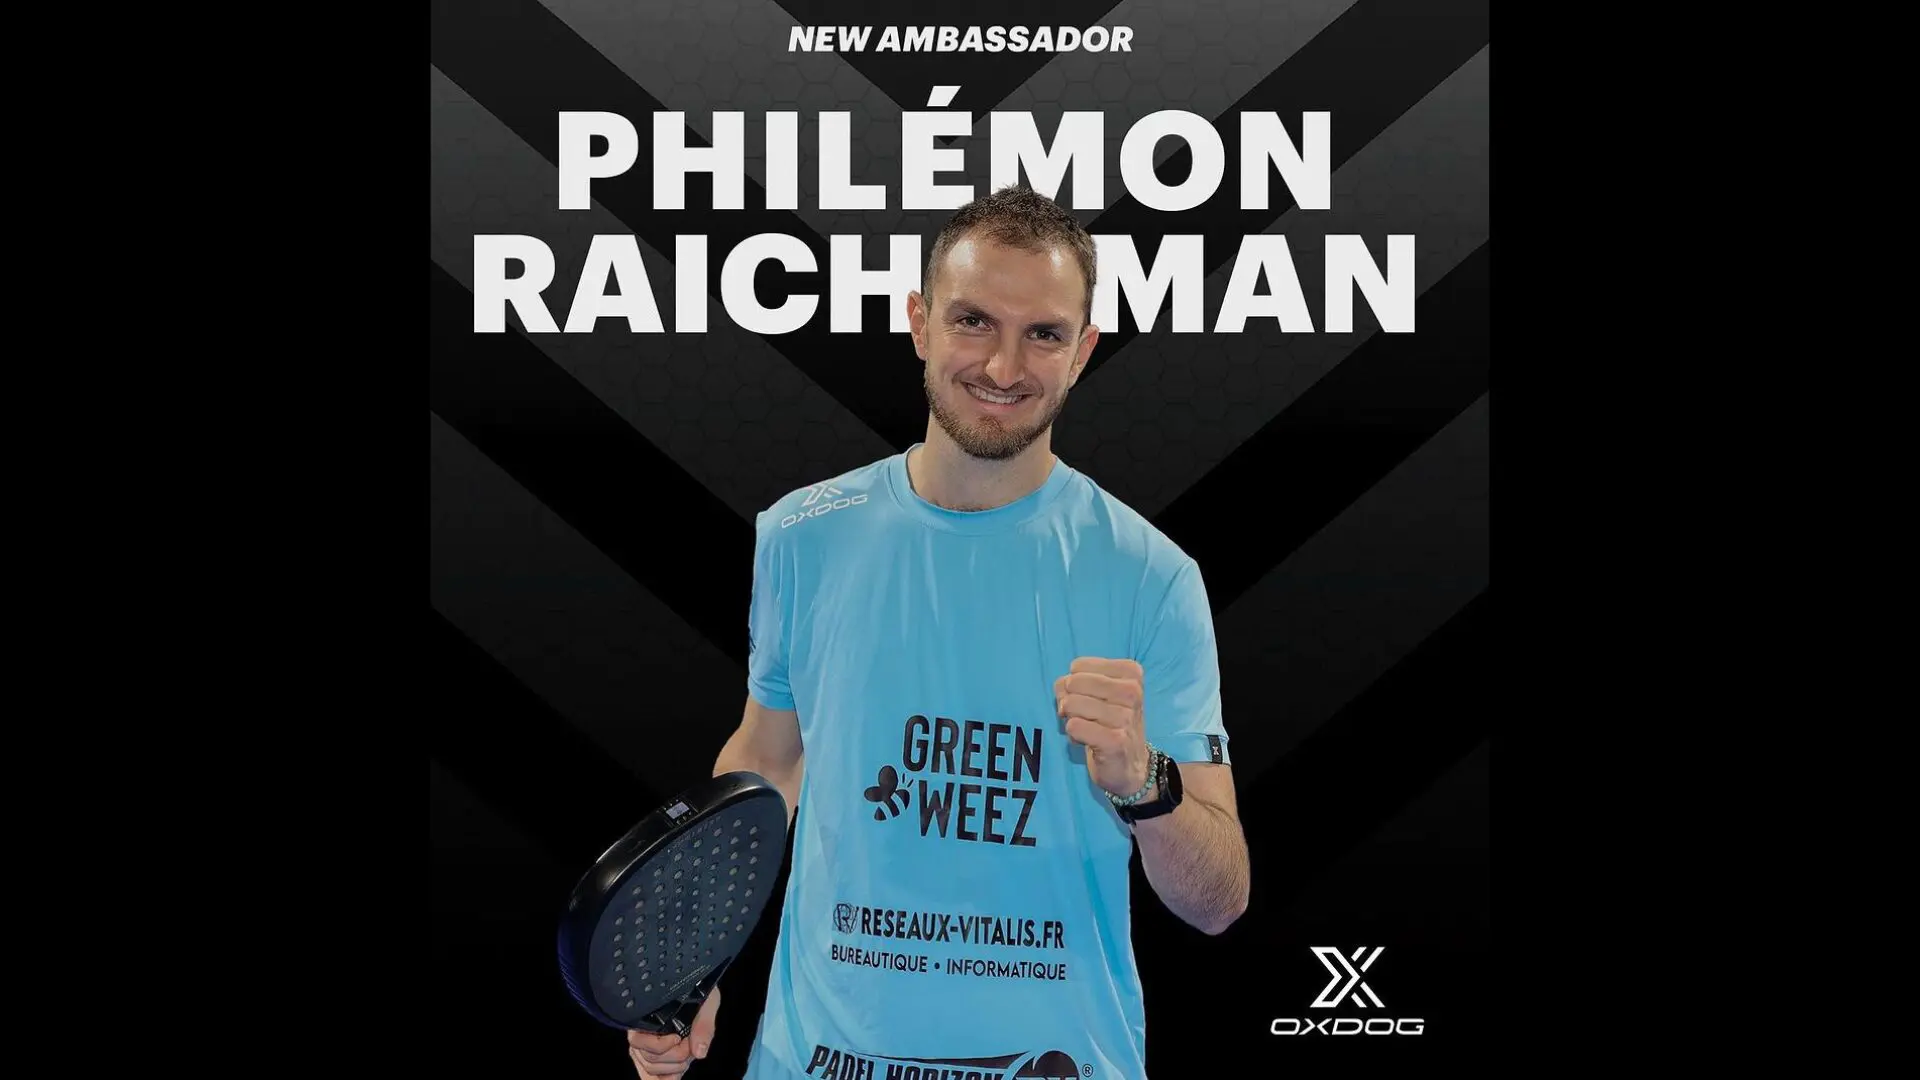 Philémon Raichman går med i laget Oxdog